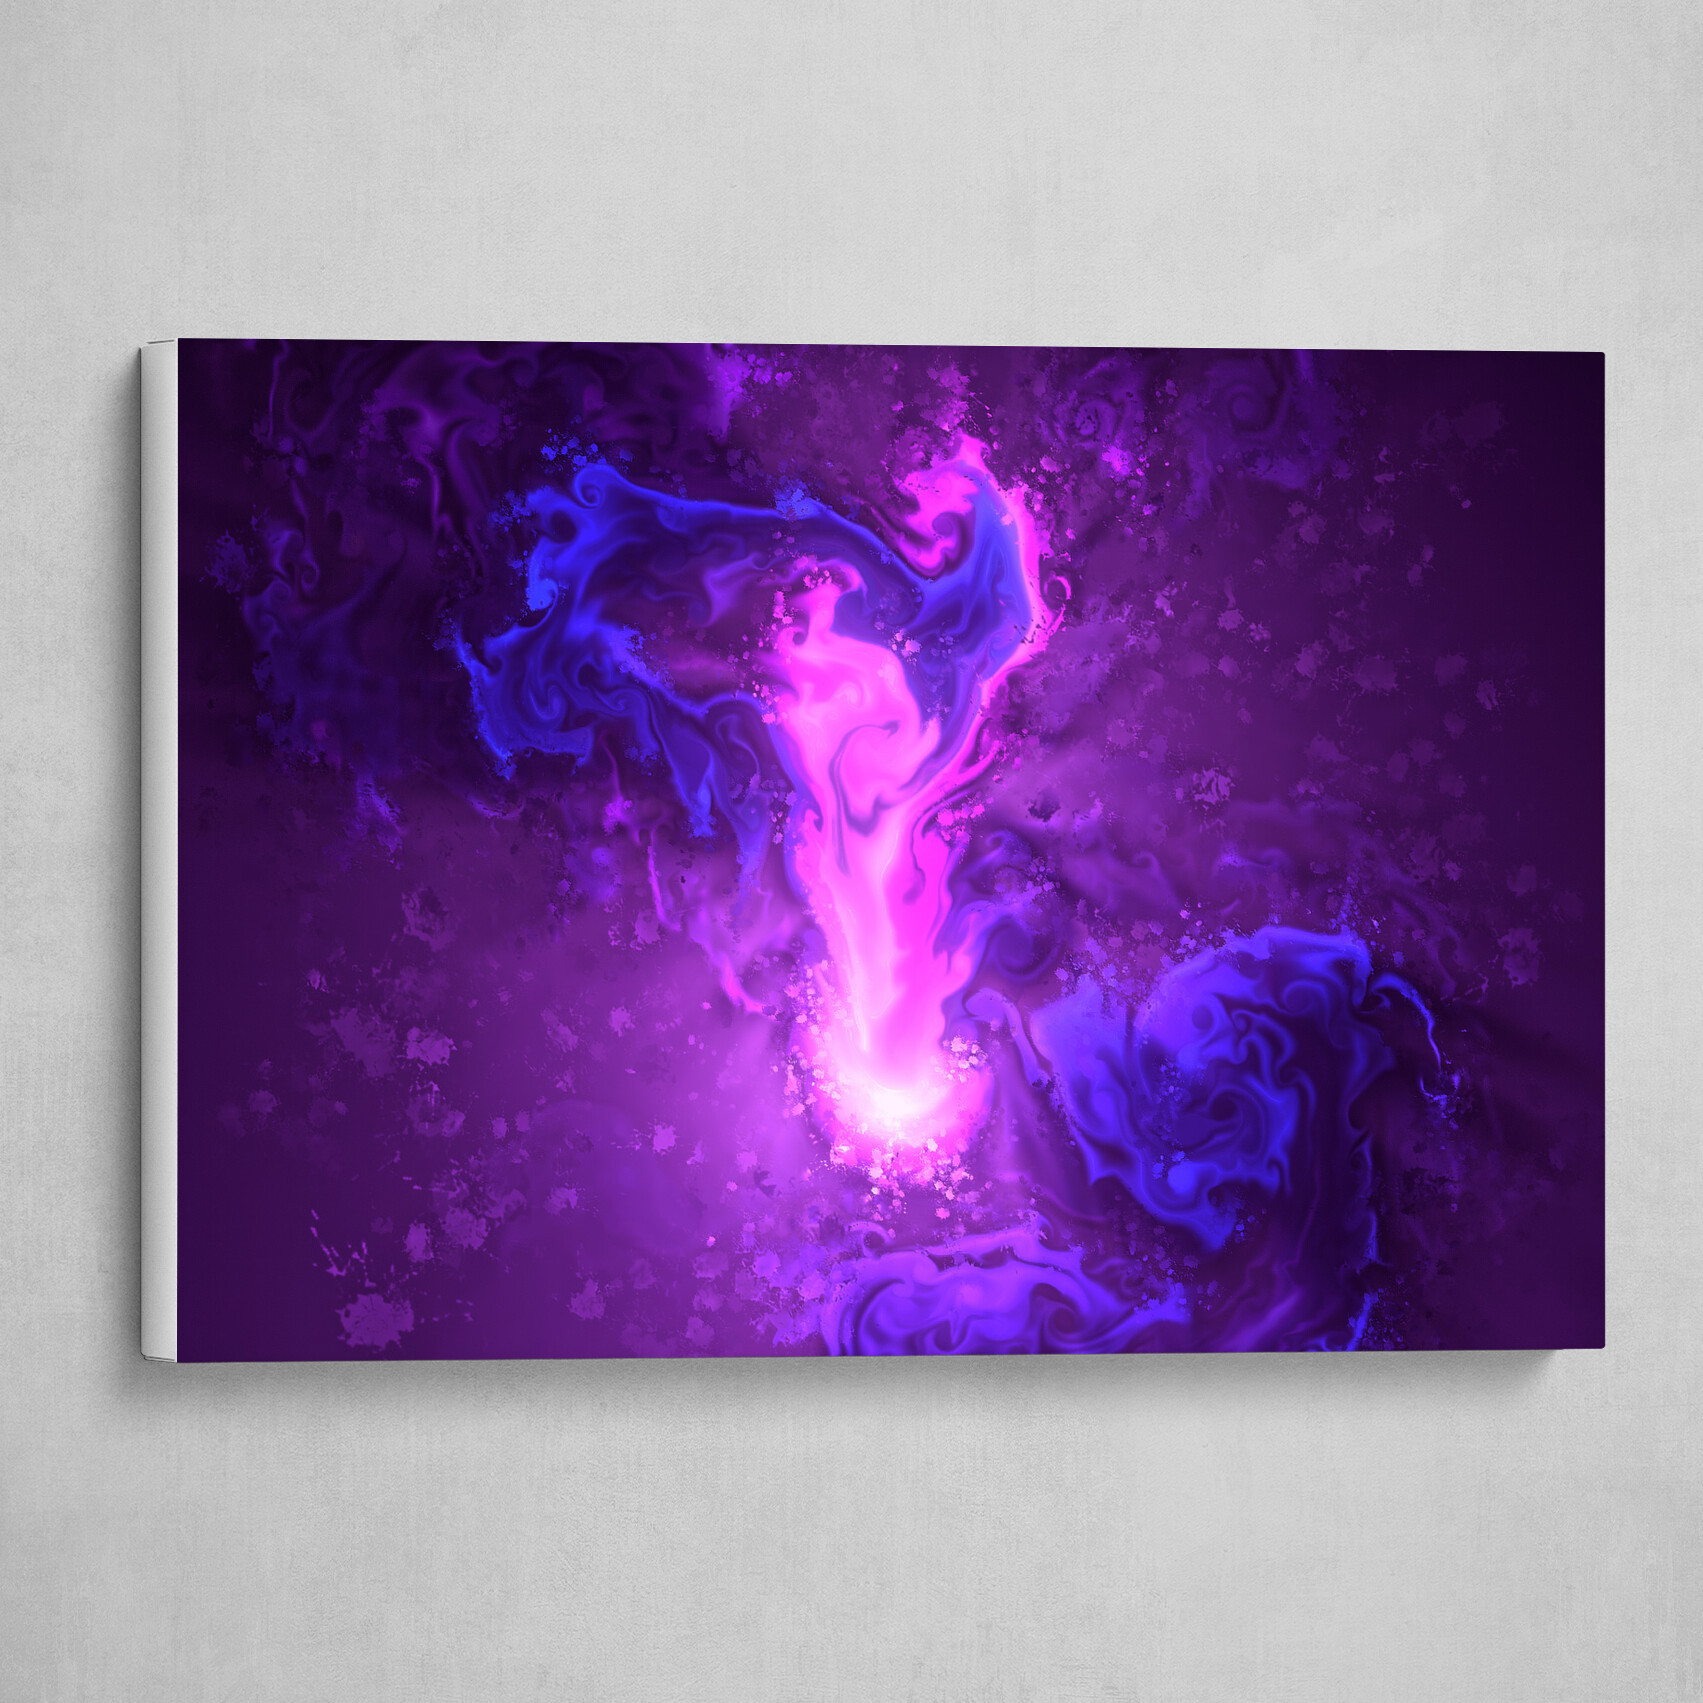 Purple fluid abstract